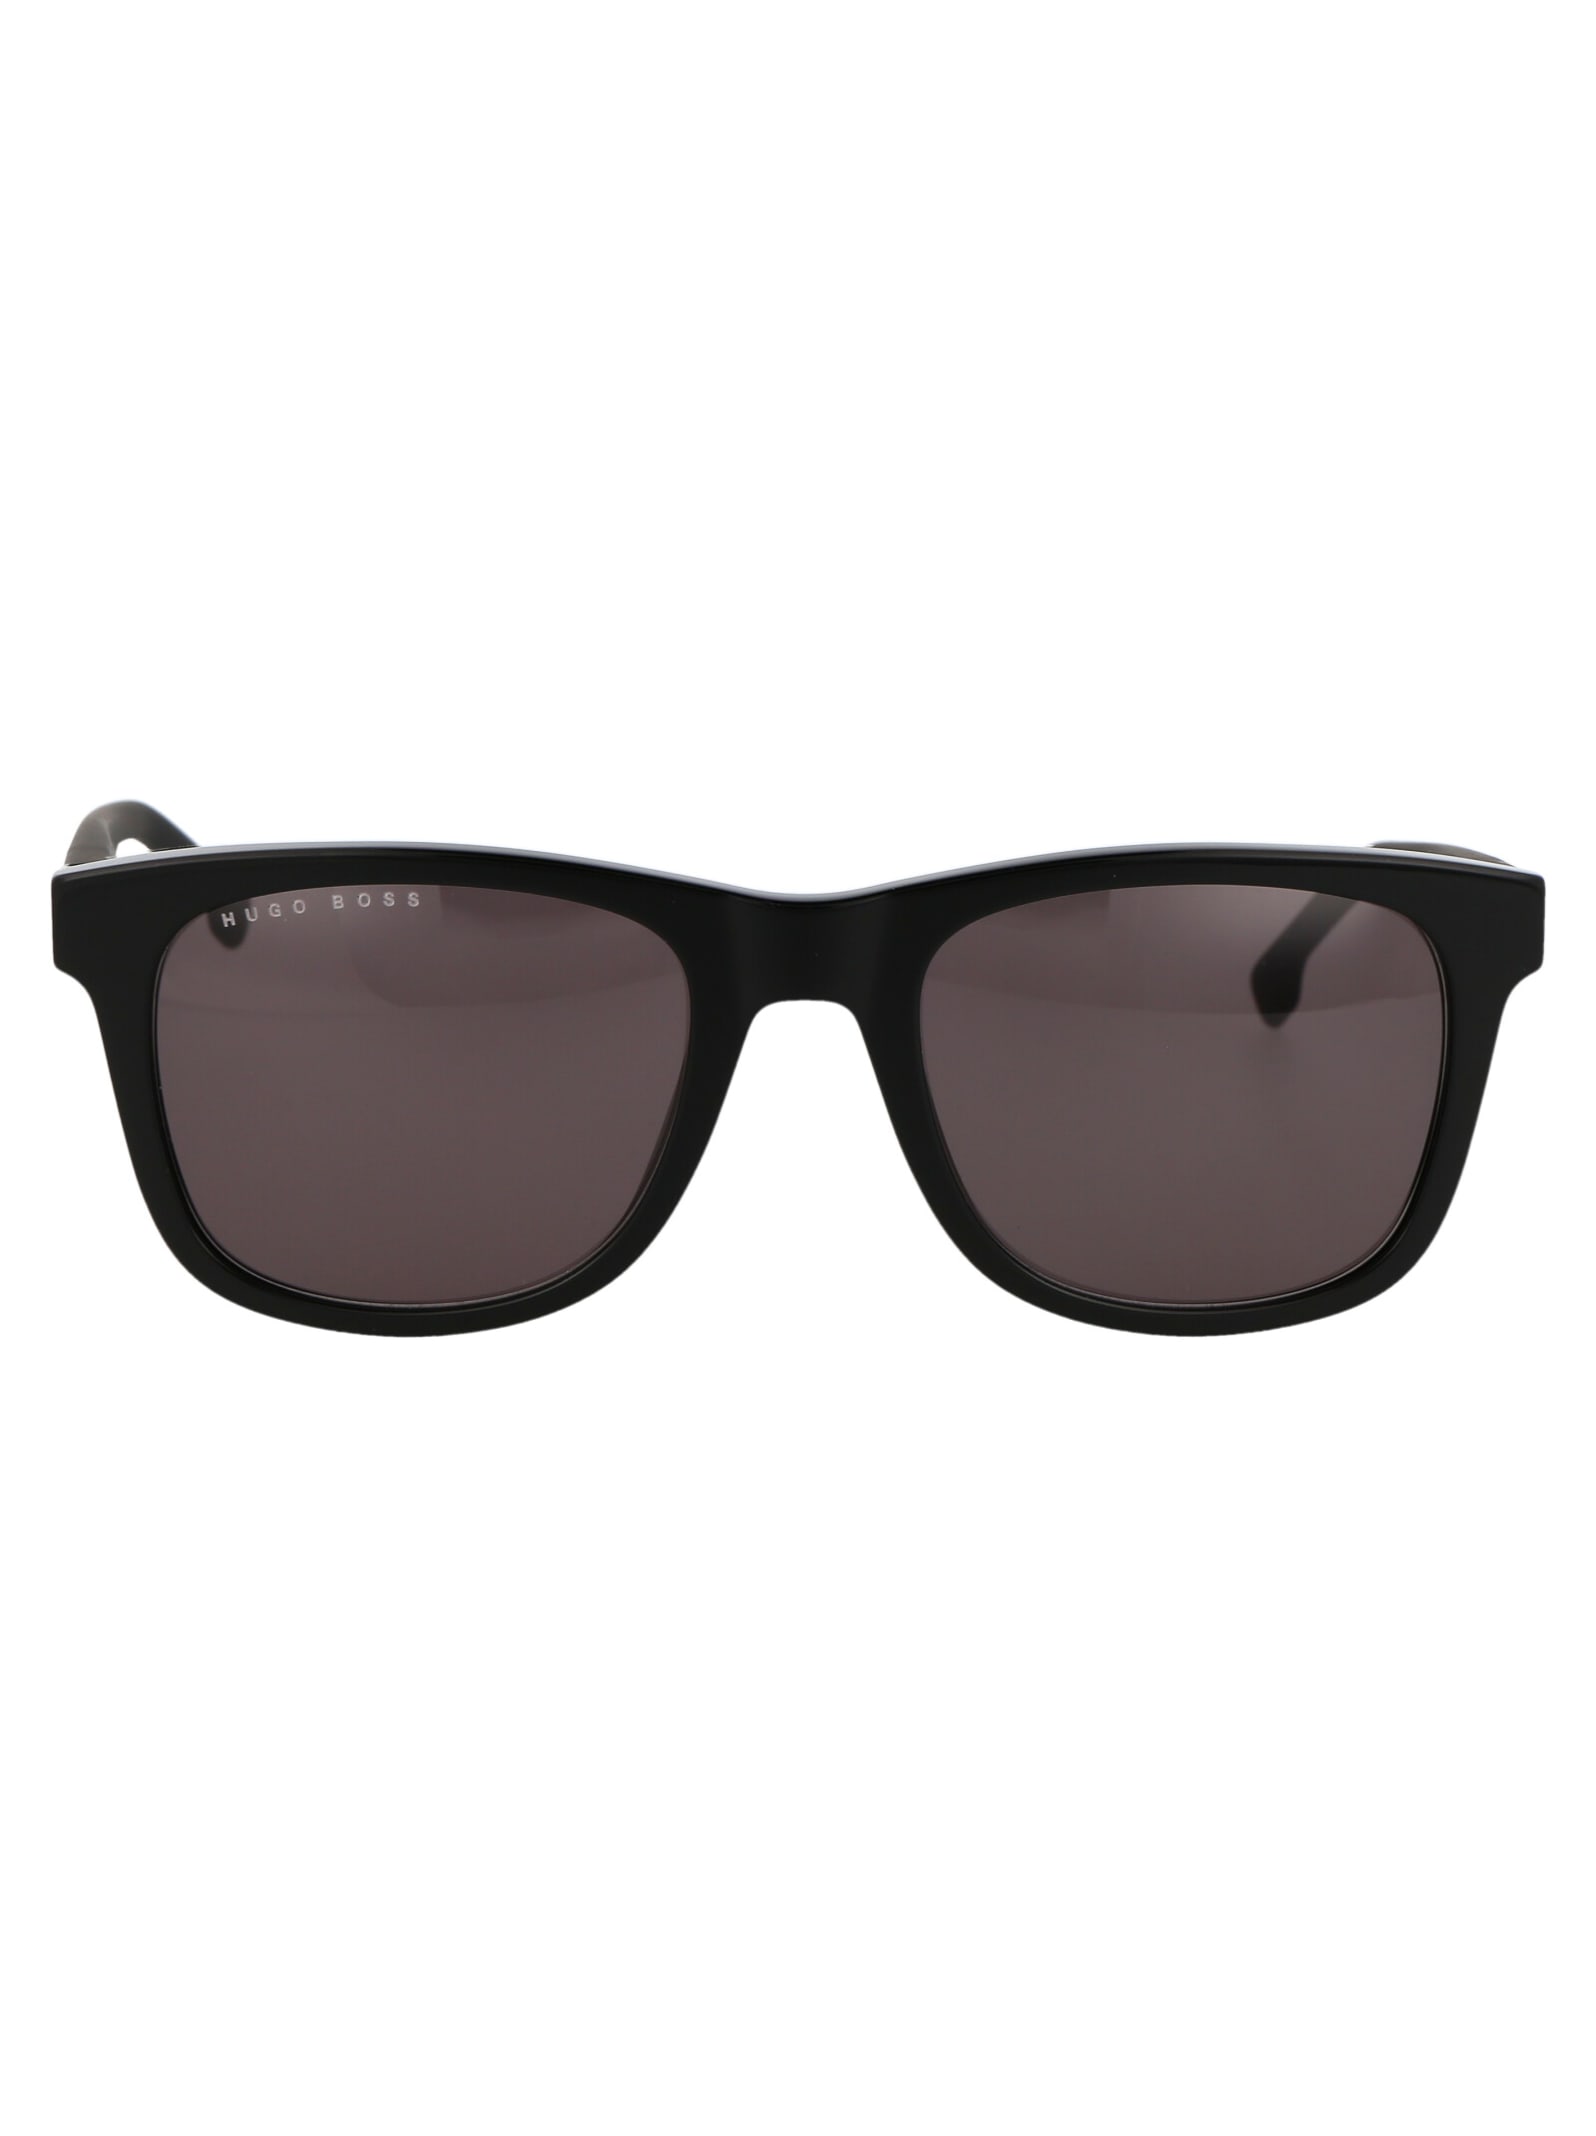 Hugo Boss Boss 1039/s Sunglasses